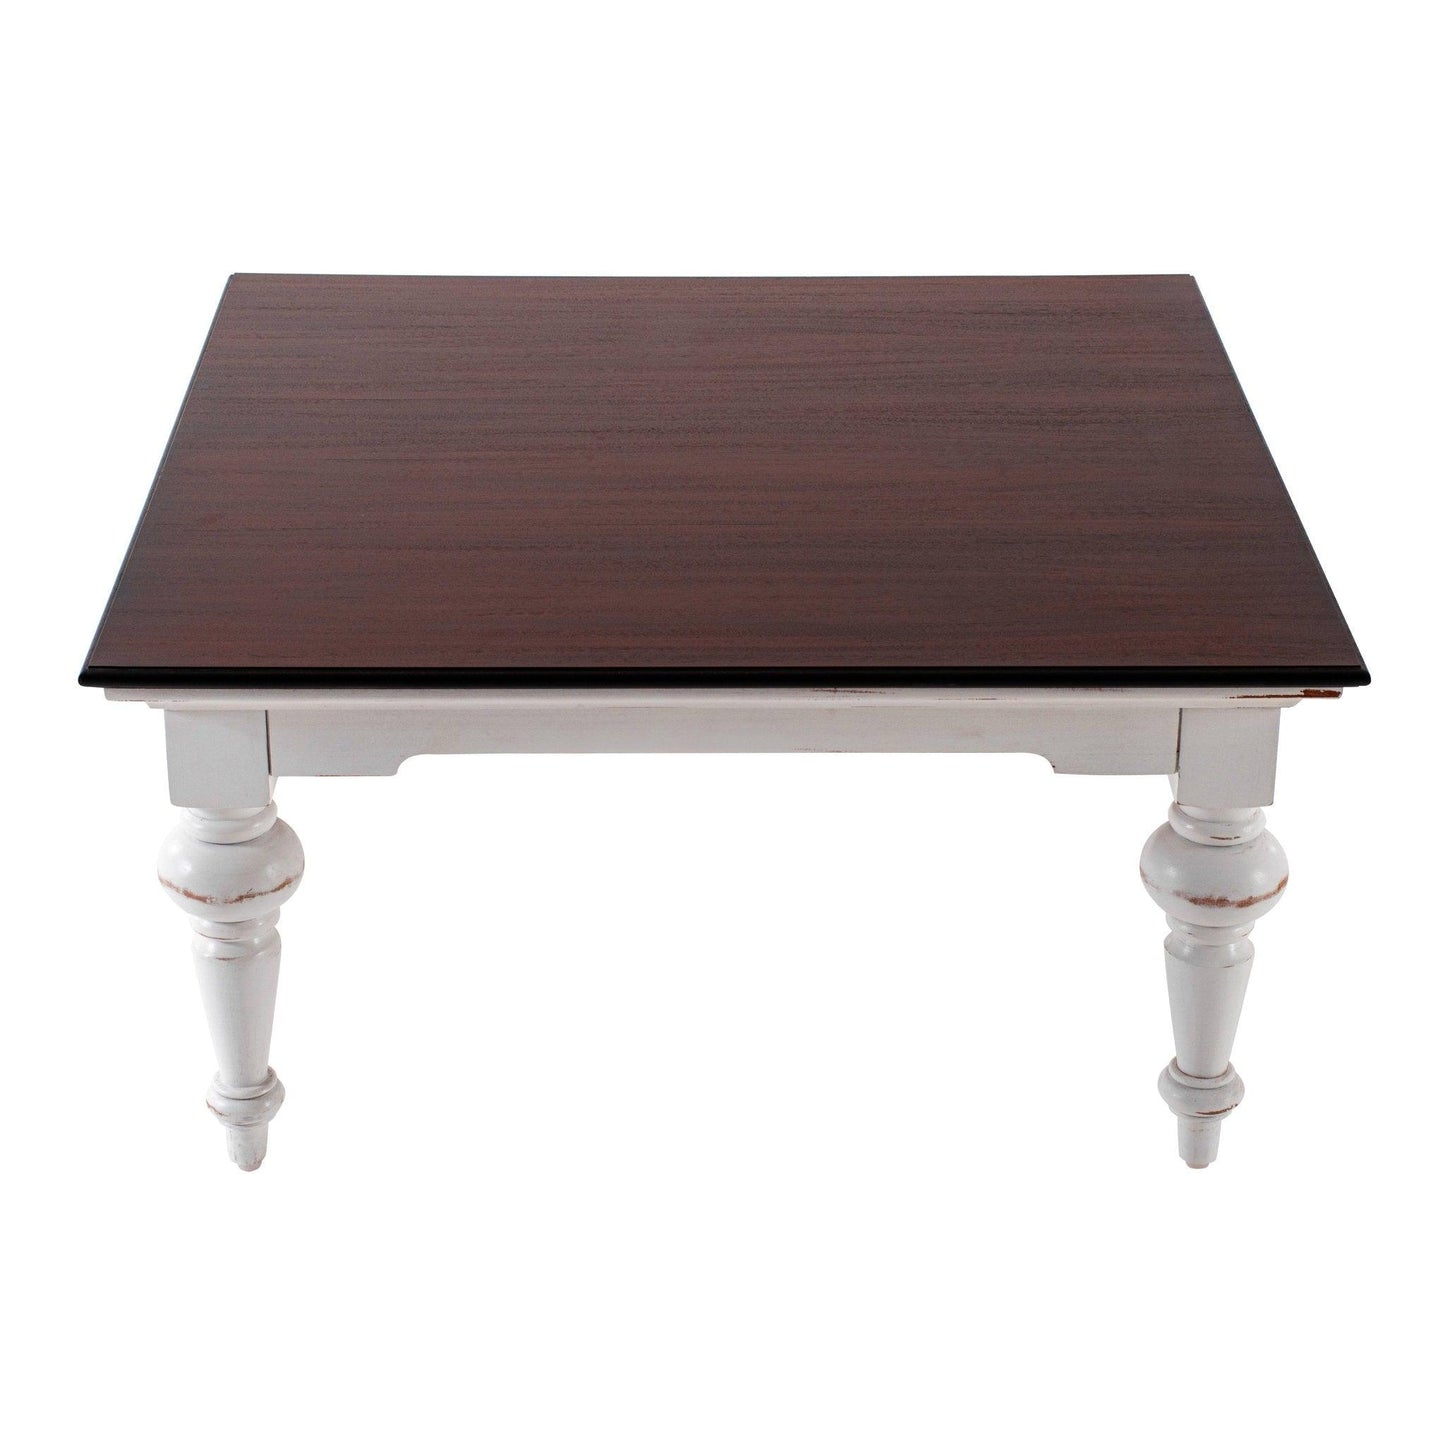 NovaSolo Square Coffee Table T774TWD - Coffee TableT774TWD8994921002101 3